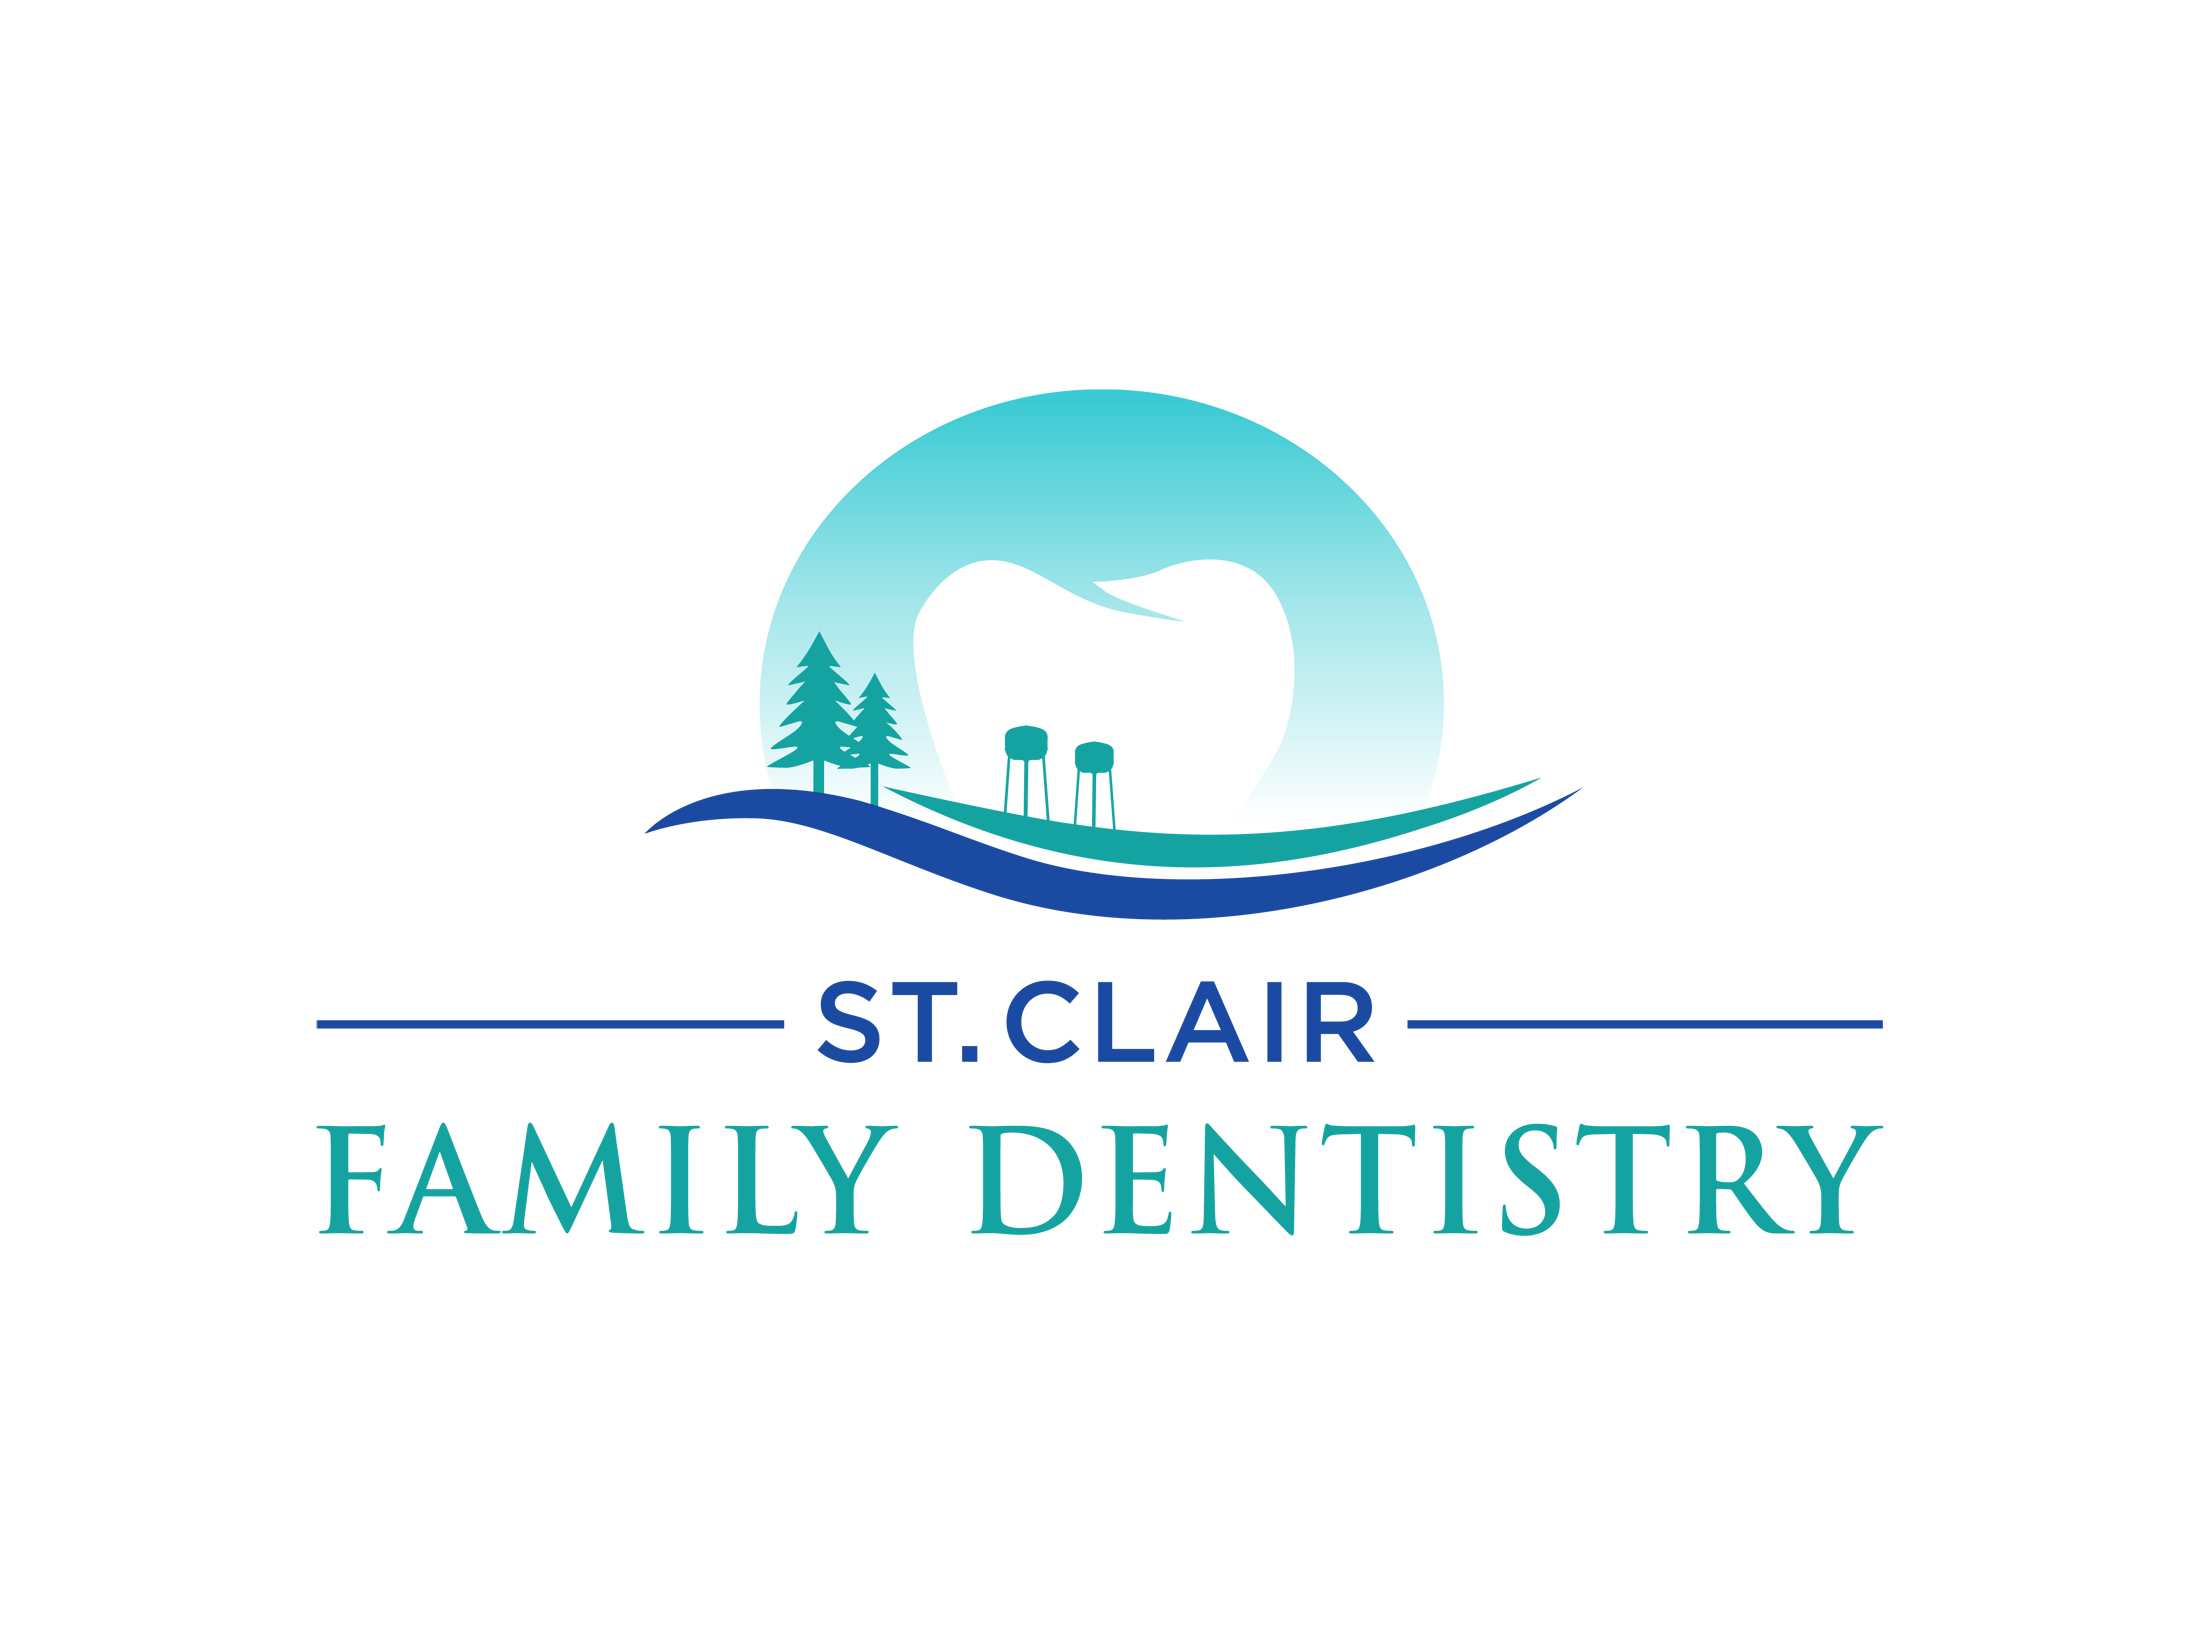 St. Clair Family Dentistry